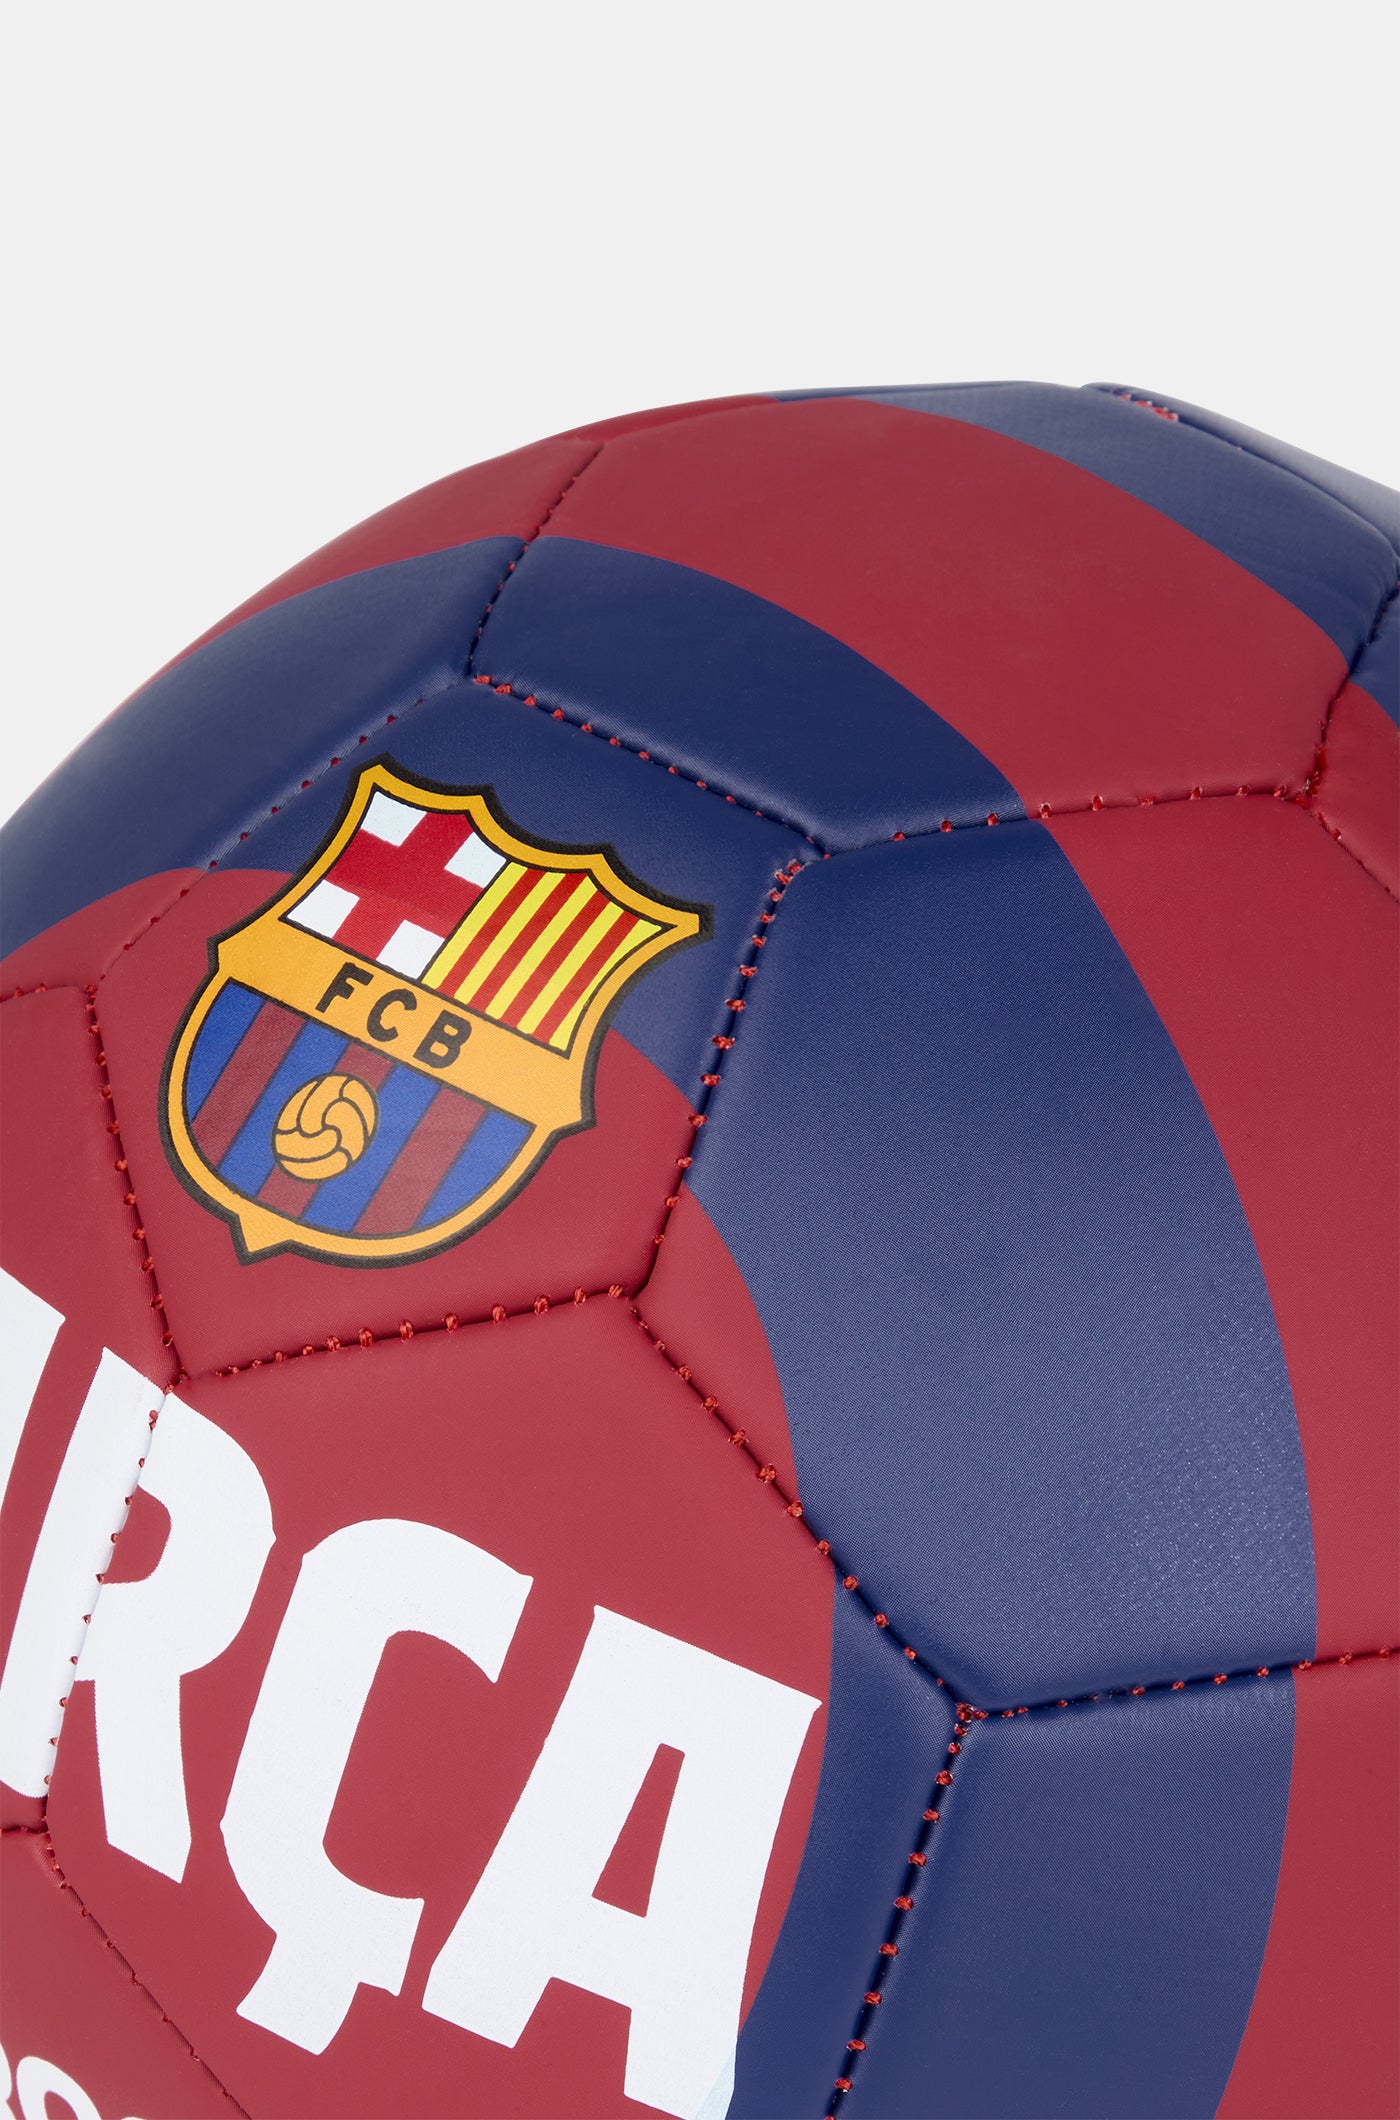 Home Kit Ball 23/24 FC Barcelona